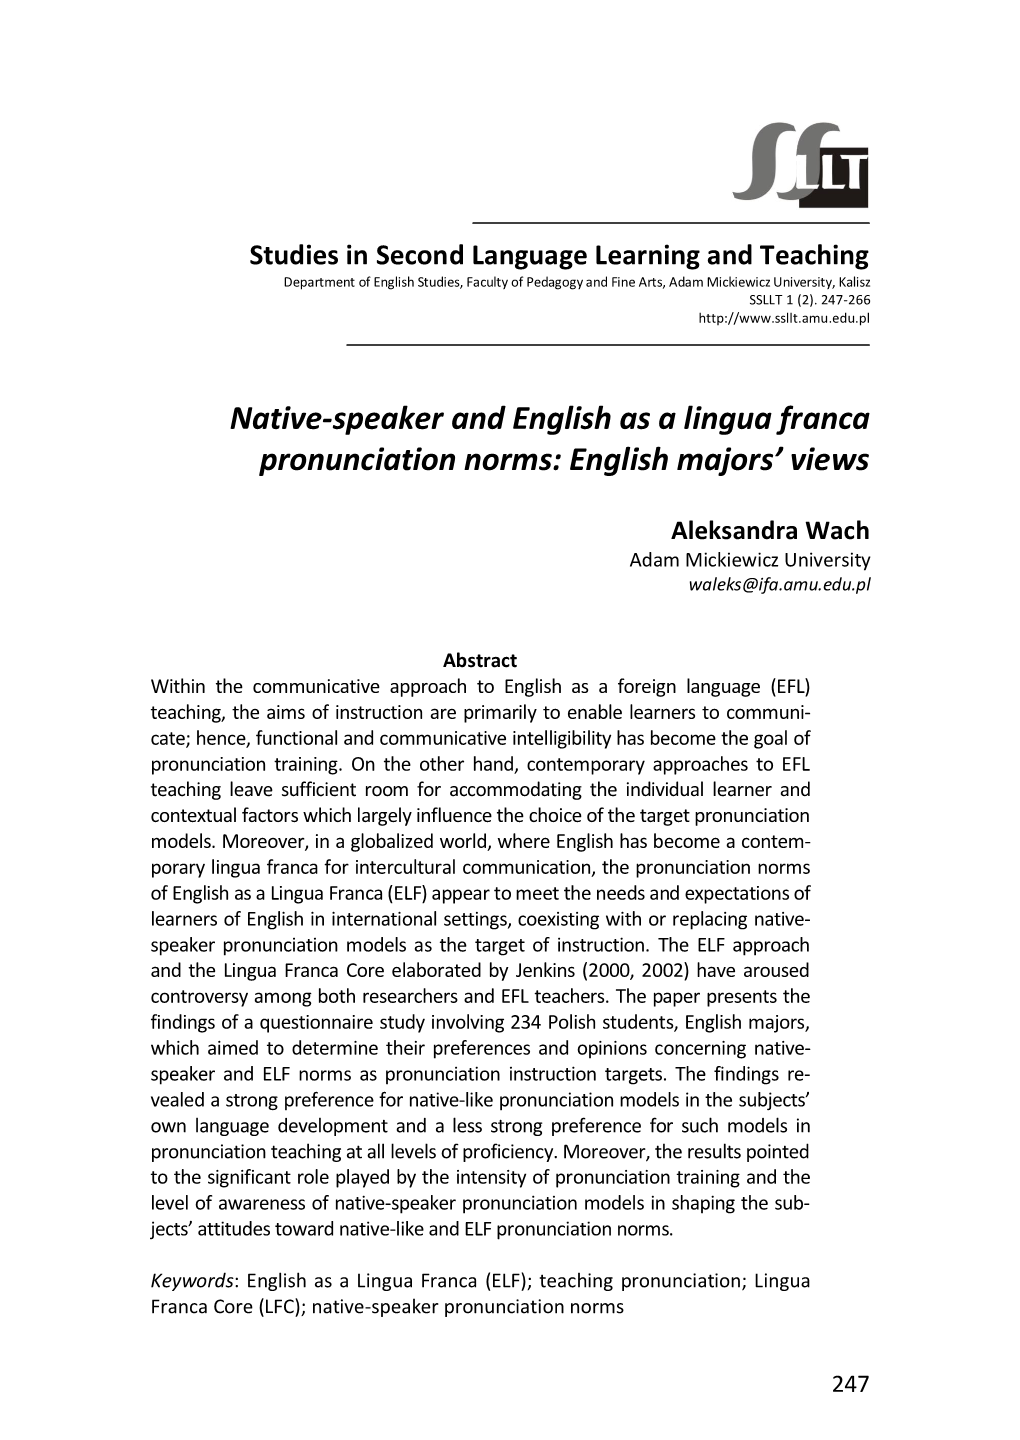 Native-Speaker and English As a Lingua Franca Pronunciation Norms: English Majors’ Views